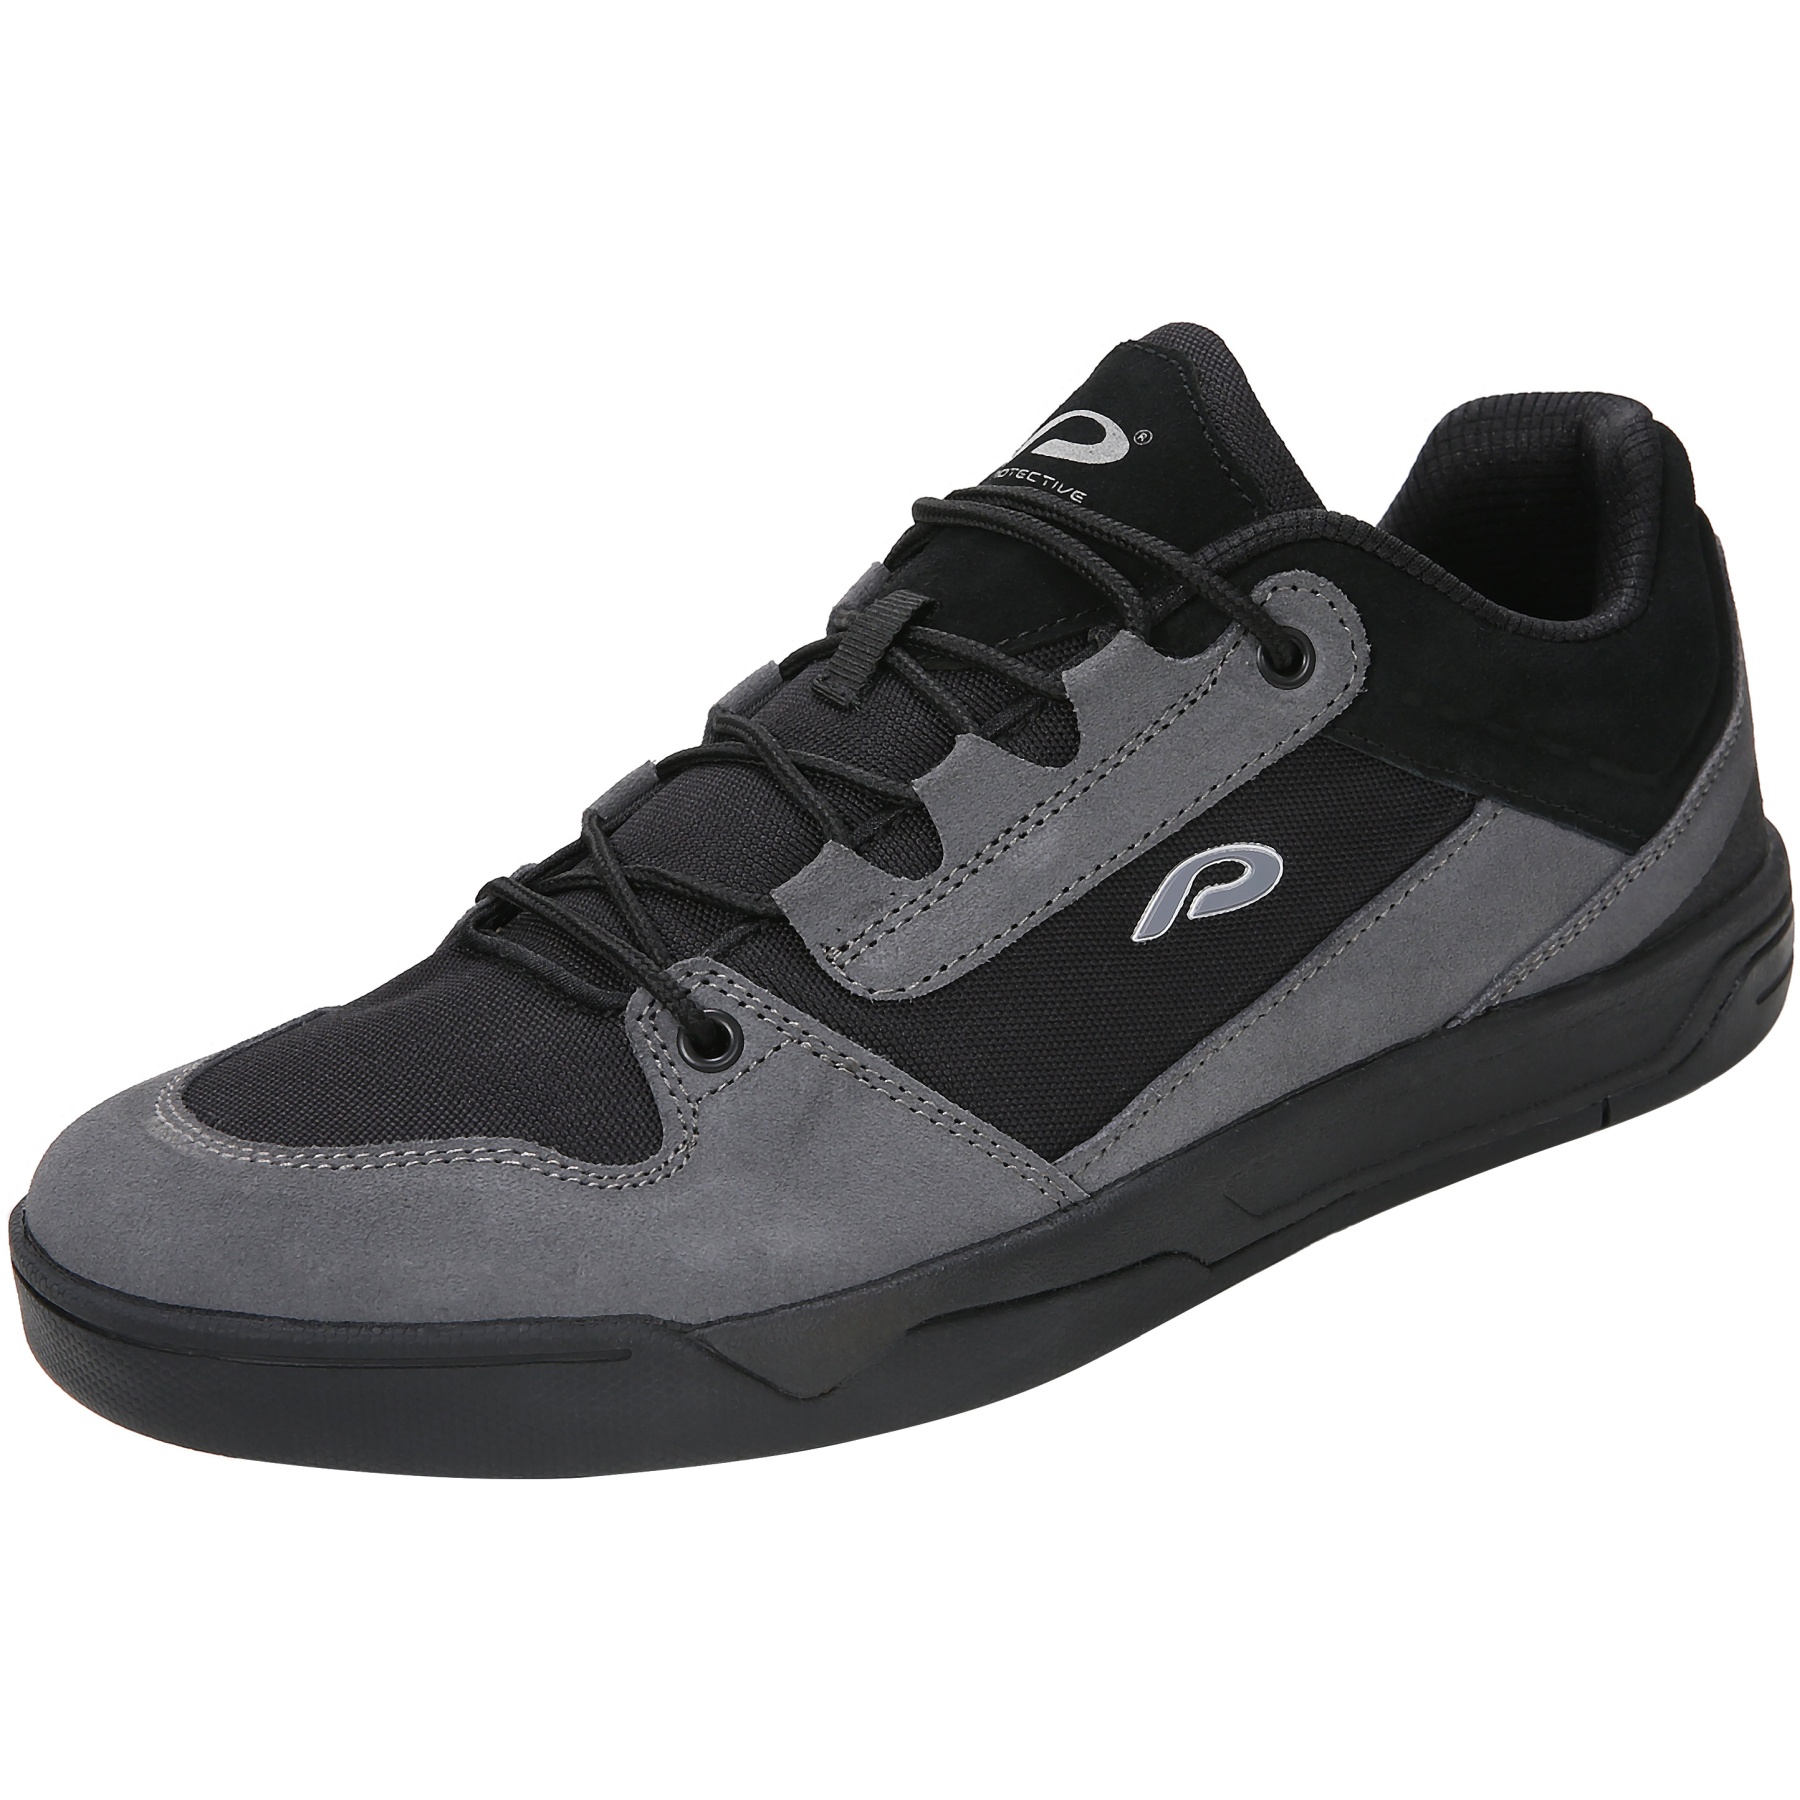 Image of PROTECTIVE P-Skids Shoes Unisex - black